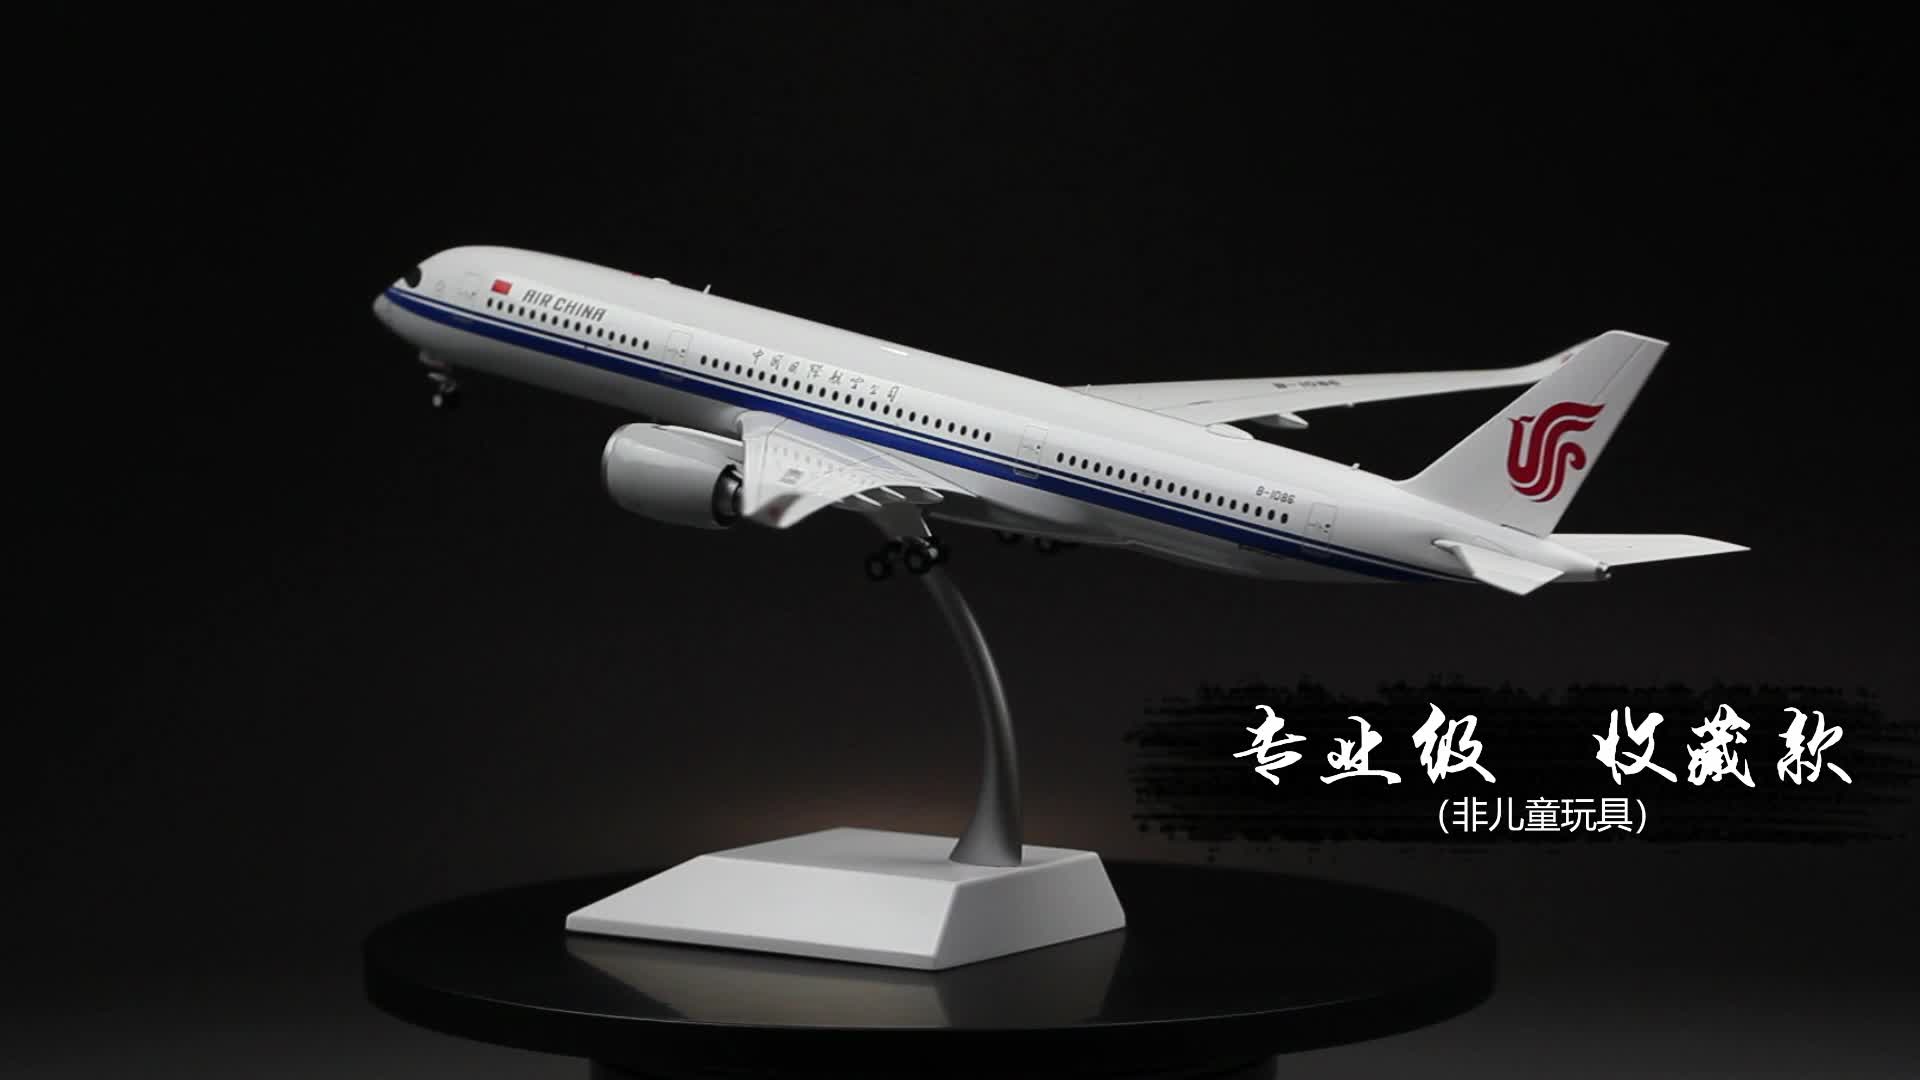 Air China 최초의 A350-900 합금 민간 항공 시뮬레이션 대형 항공기 모형 여객기 한정판